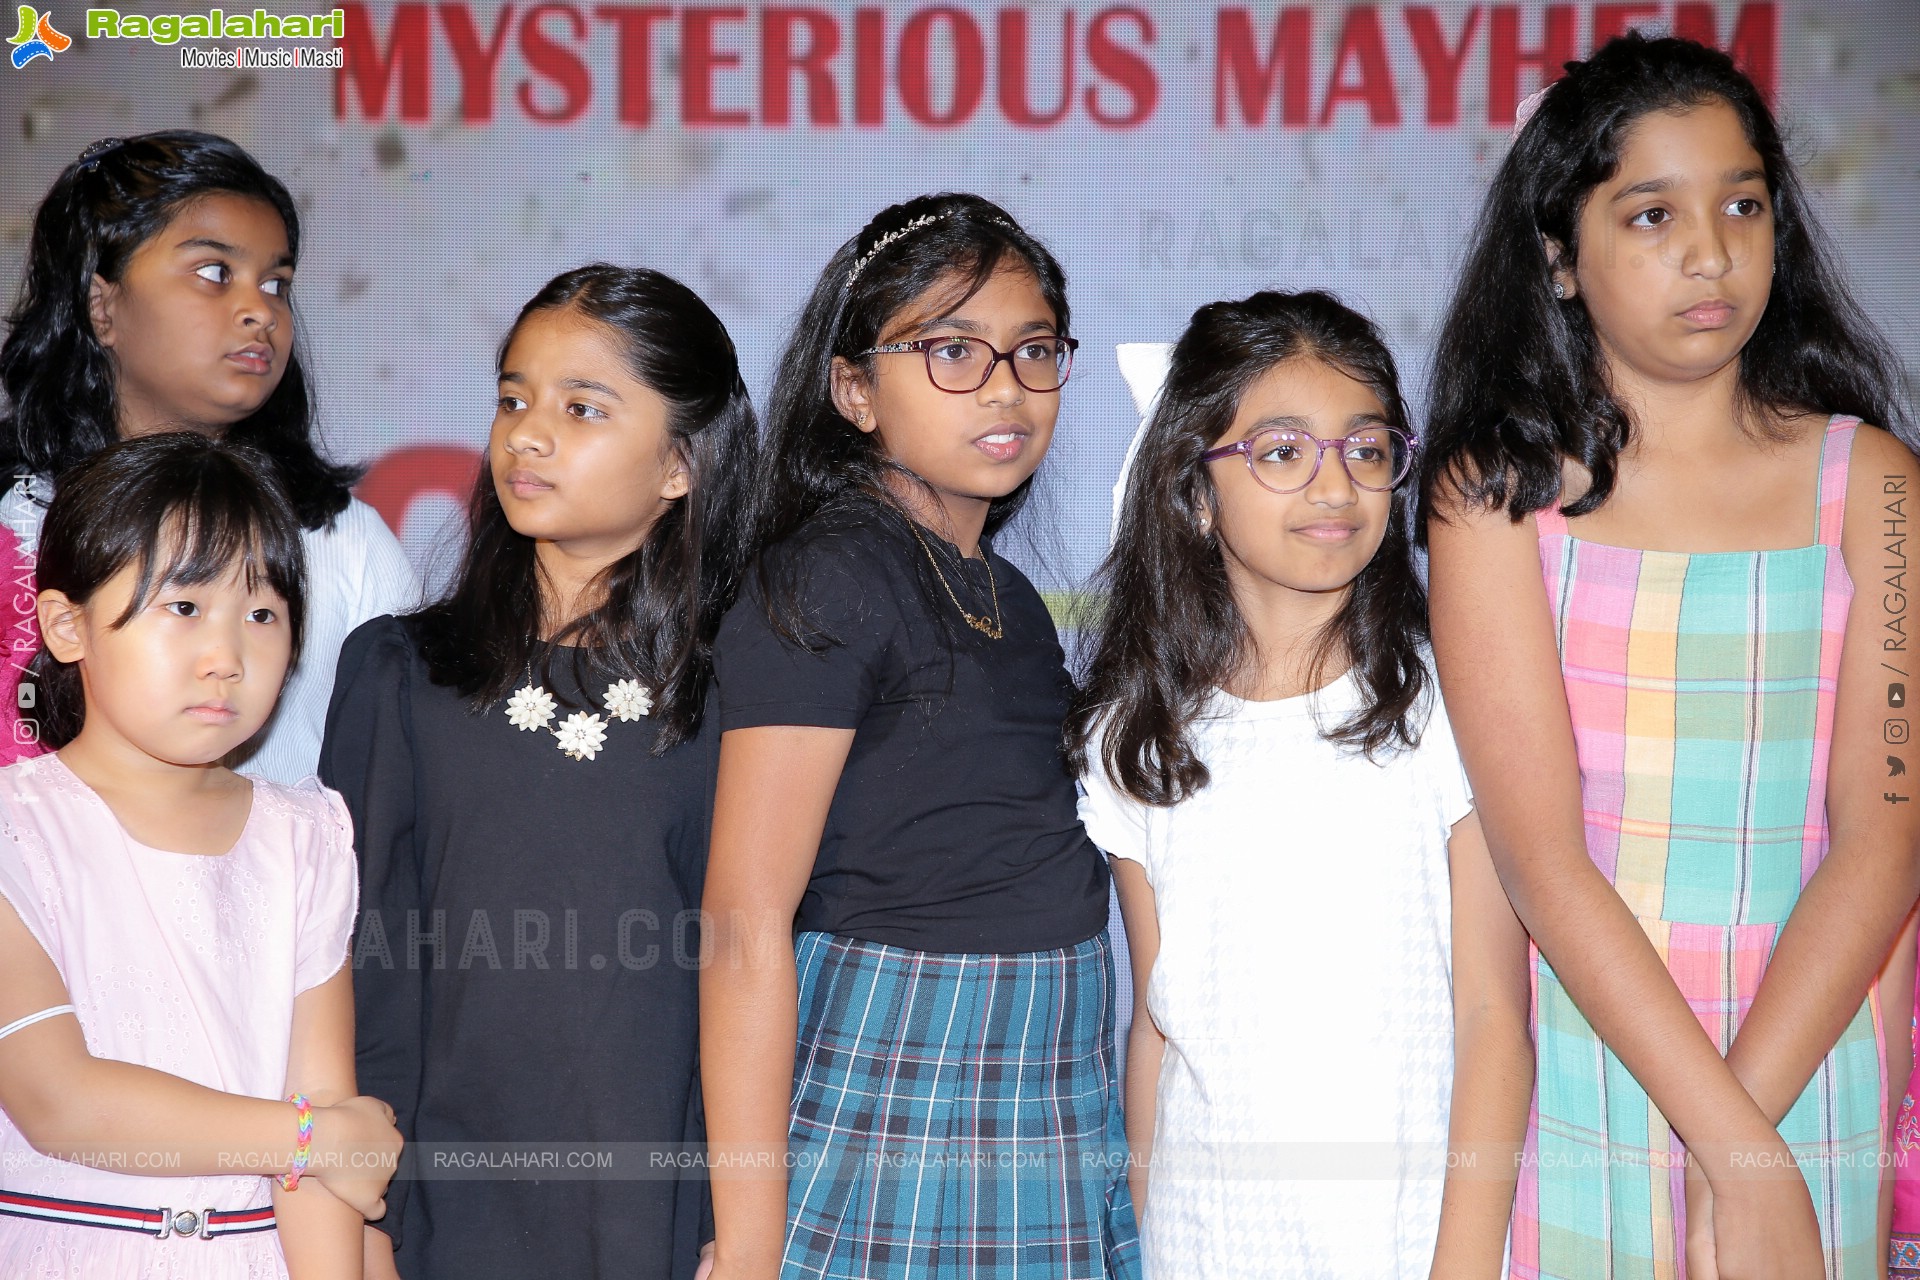 Famed Journalist Rajdeep Sardesai, Actor Nikhil Siddharth Launch The Book 'Mysterious Mayhem'